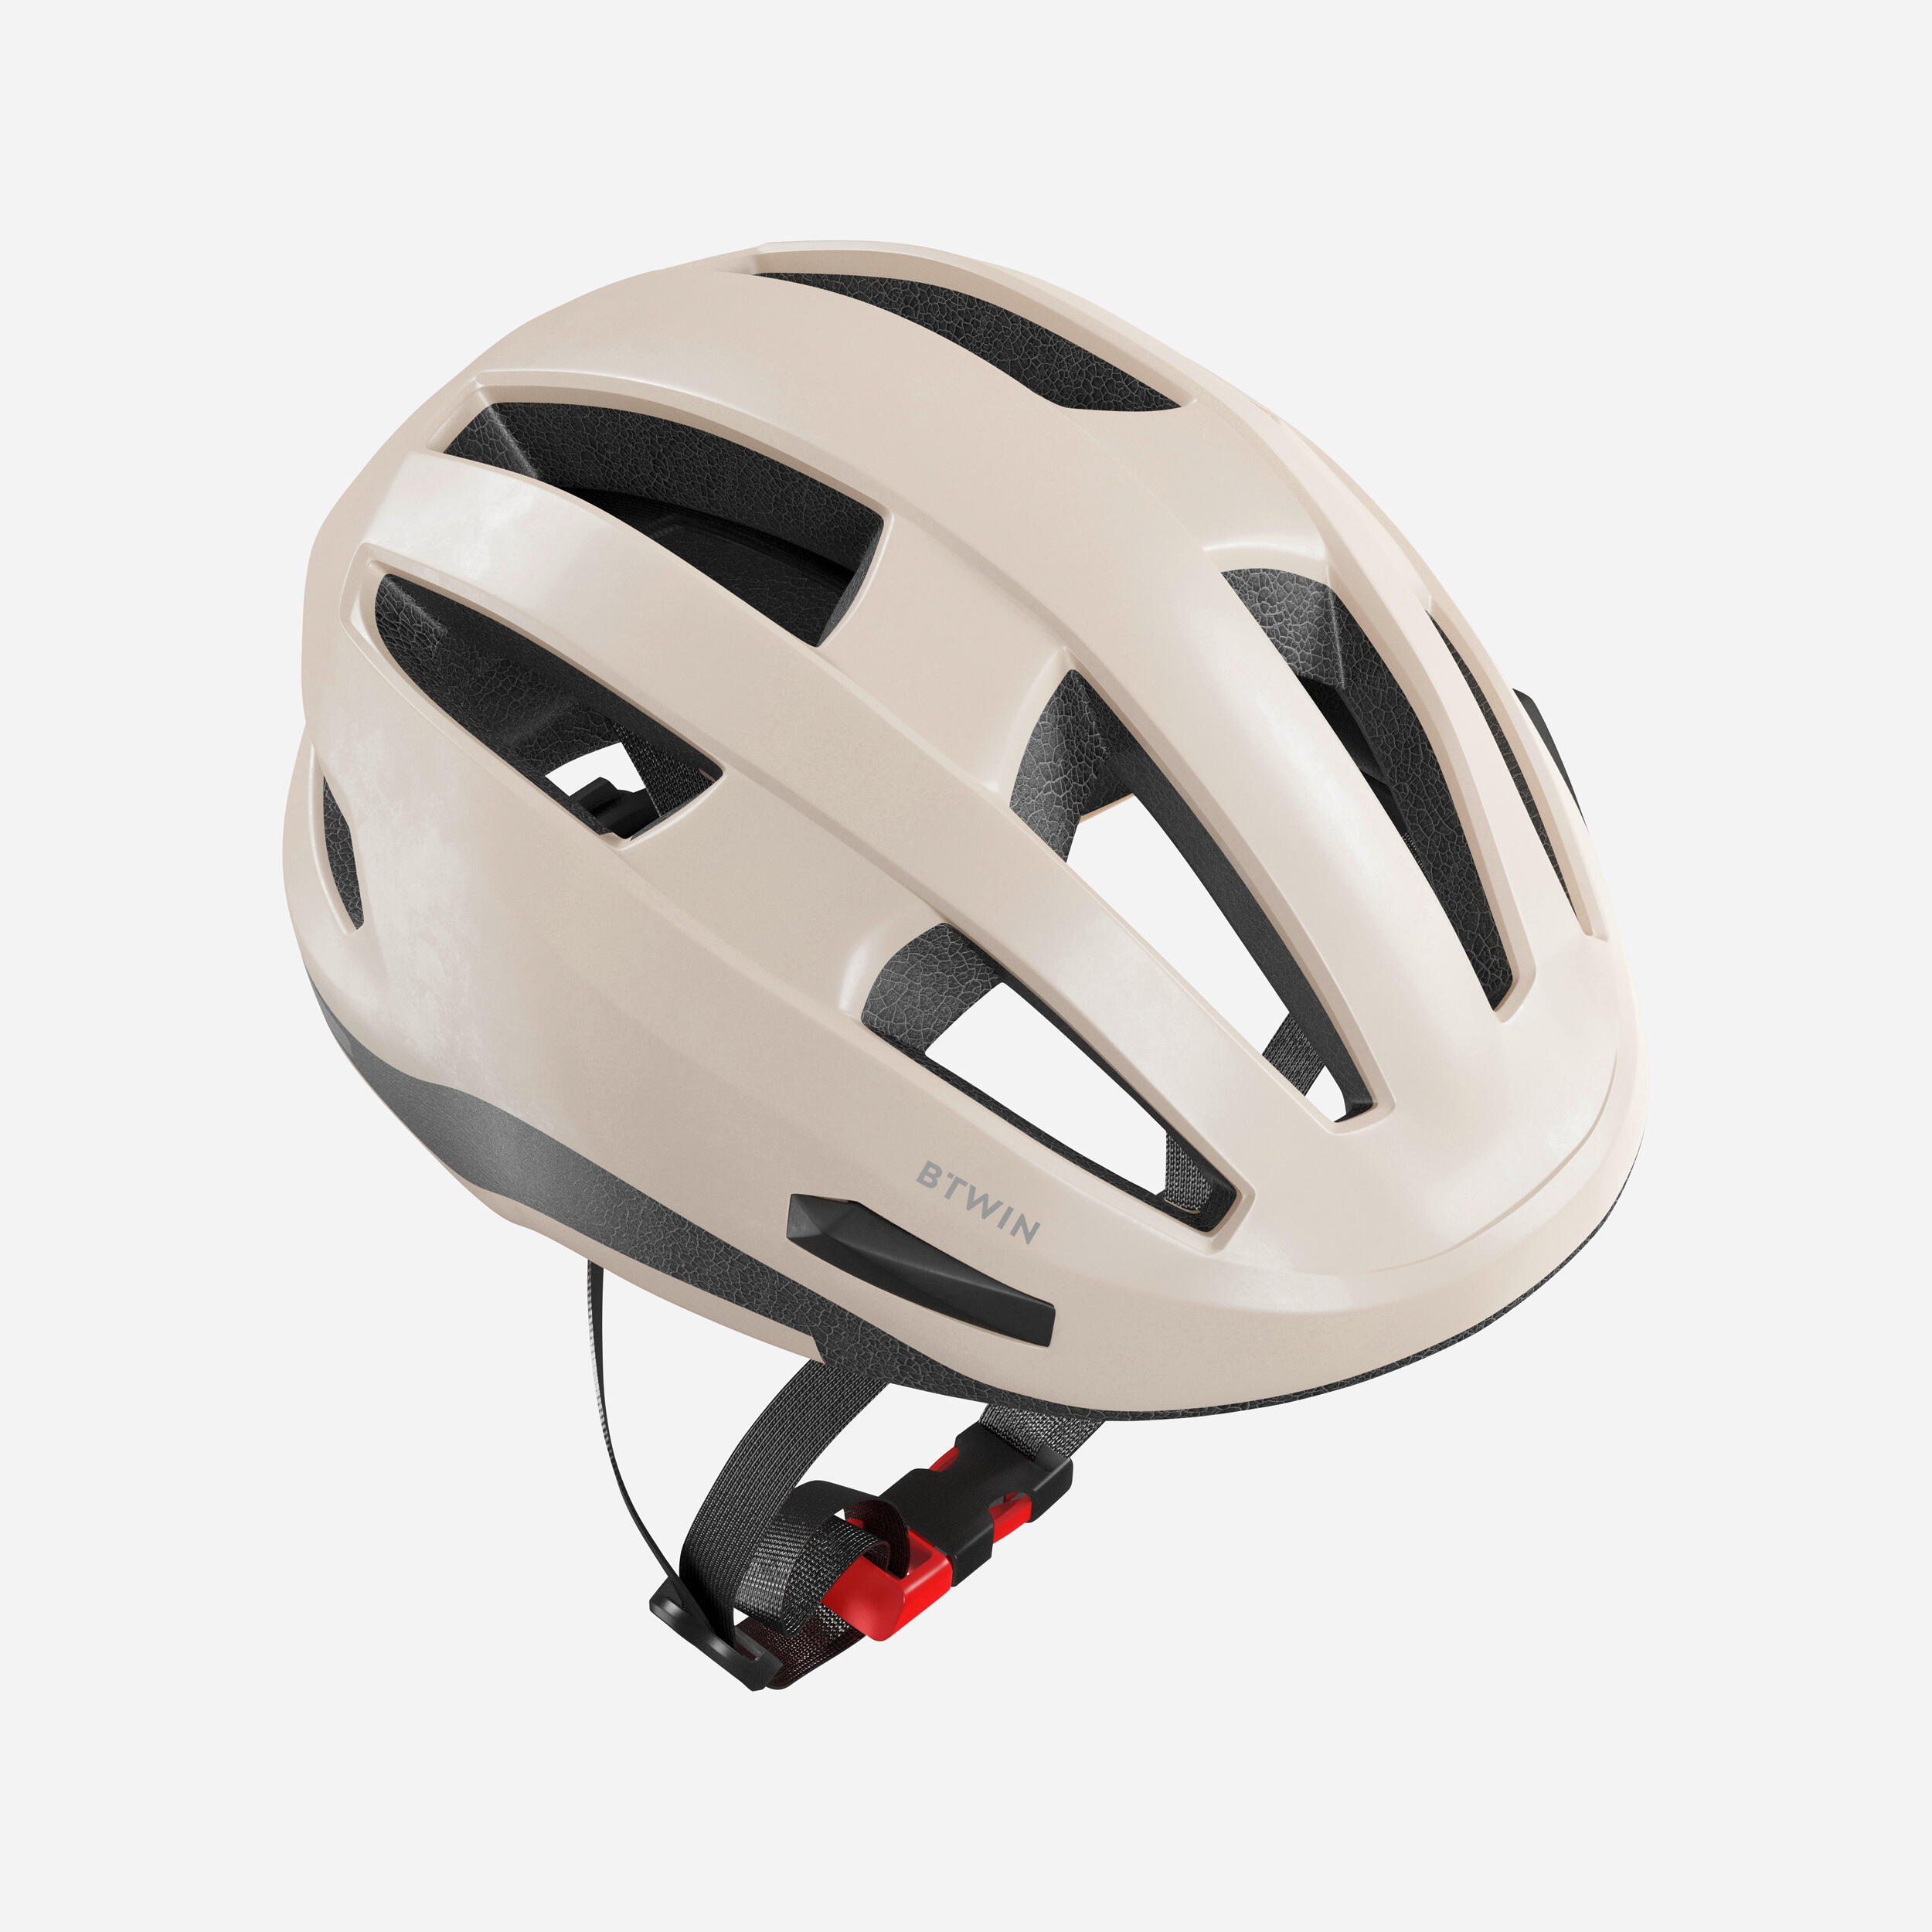 BTWIN City Cycling Helmet 500 - Beige